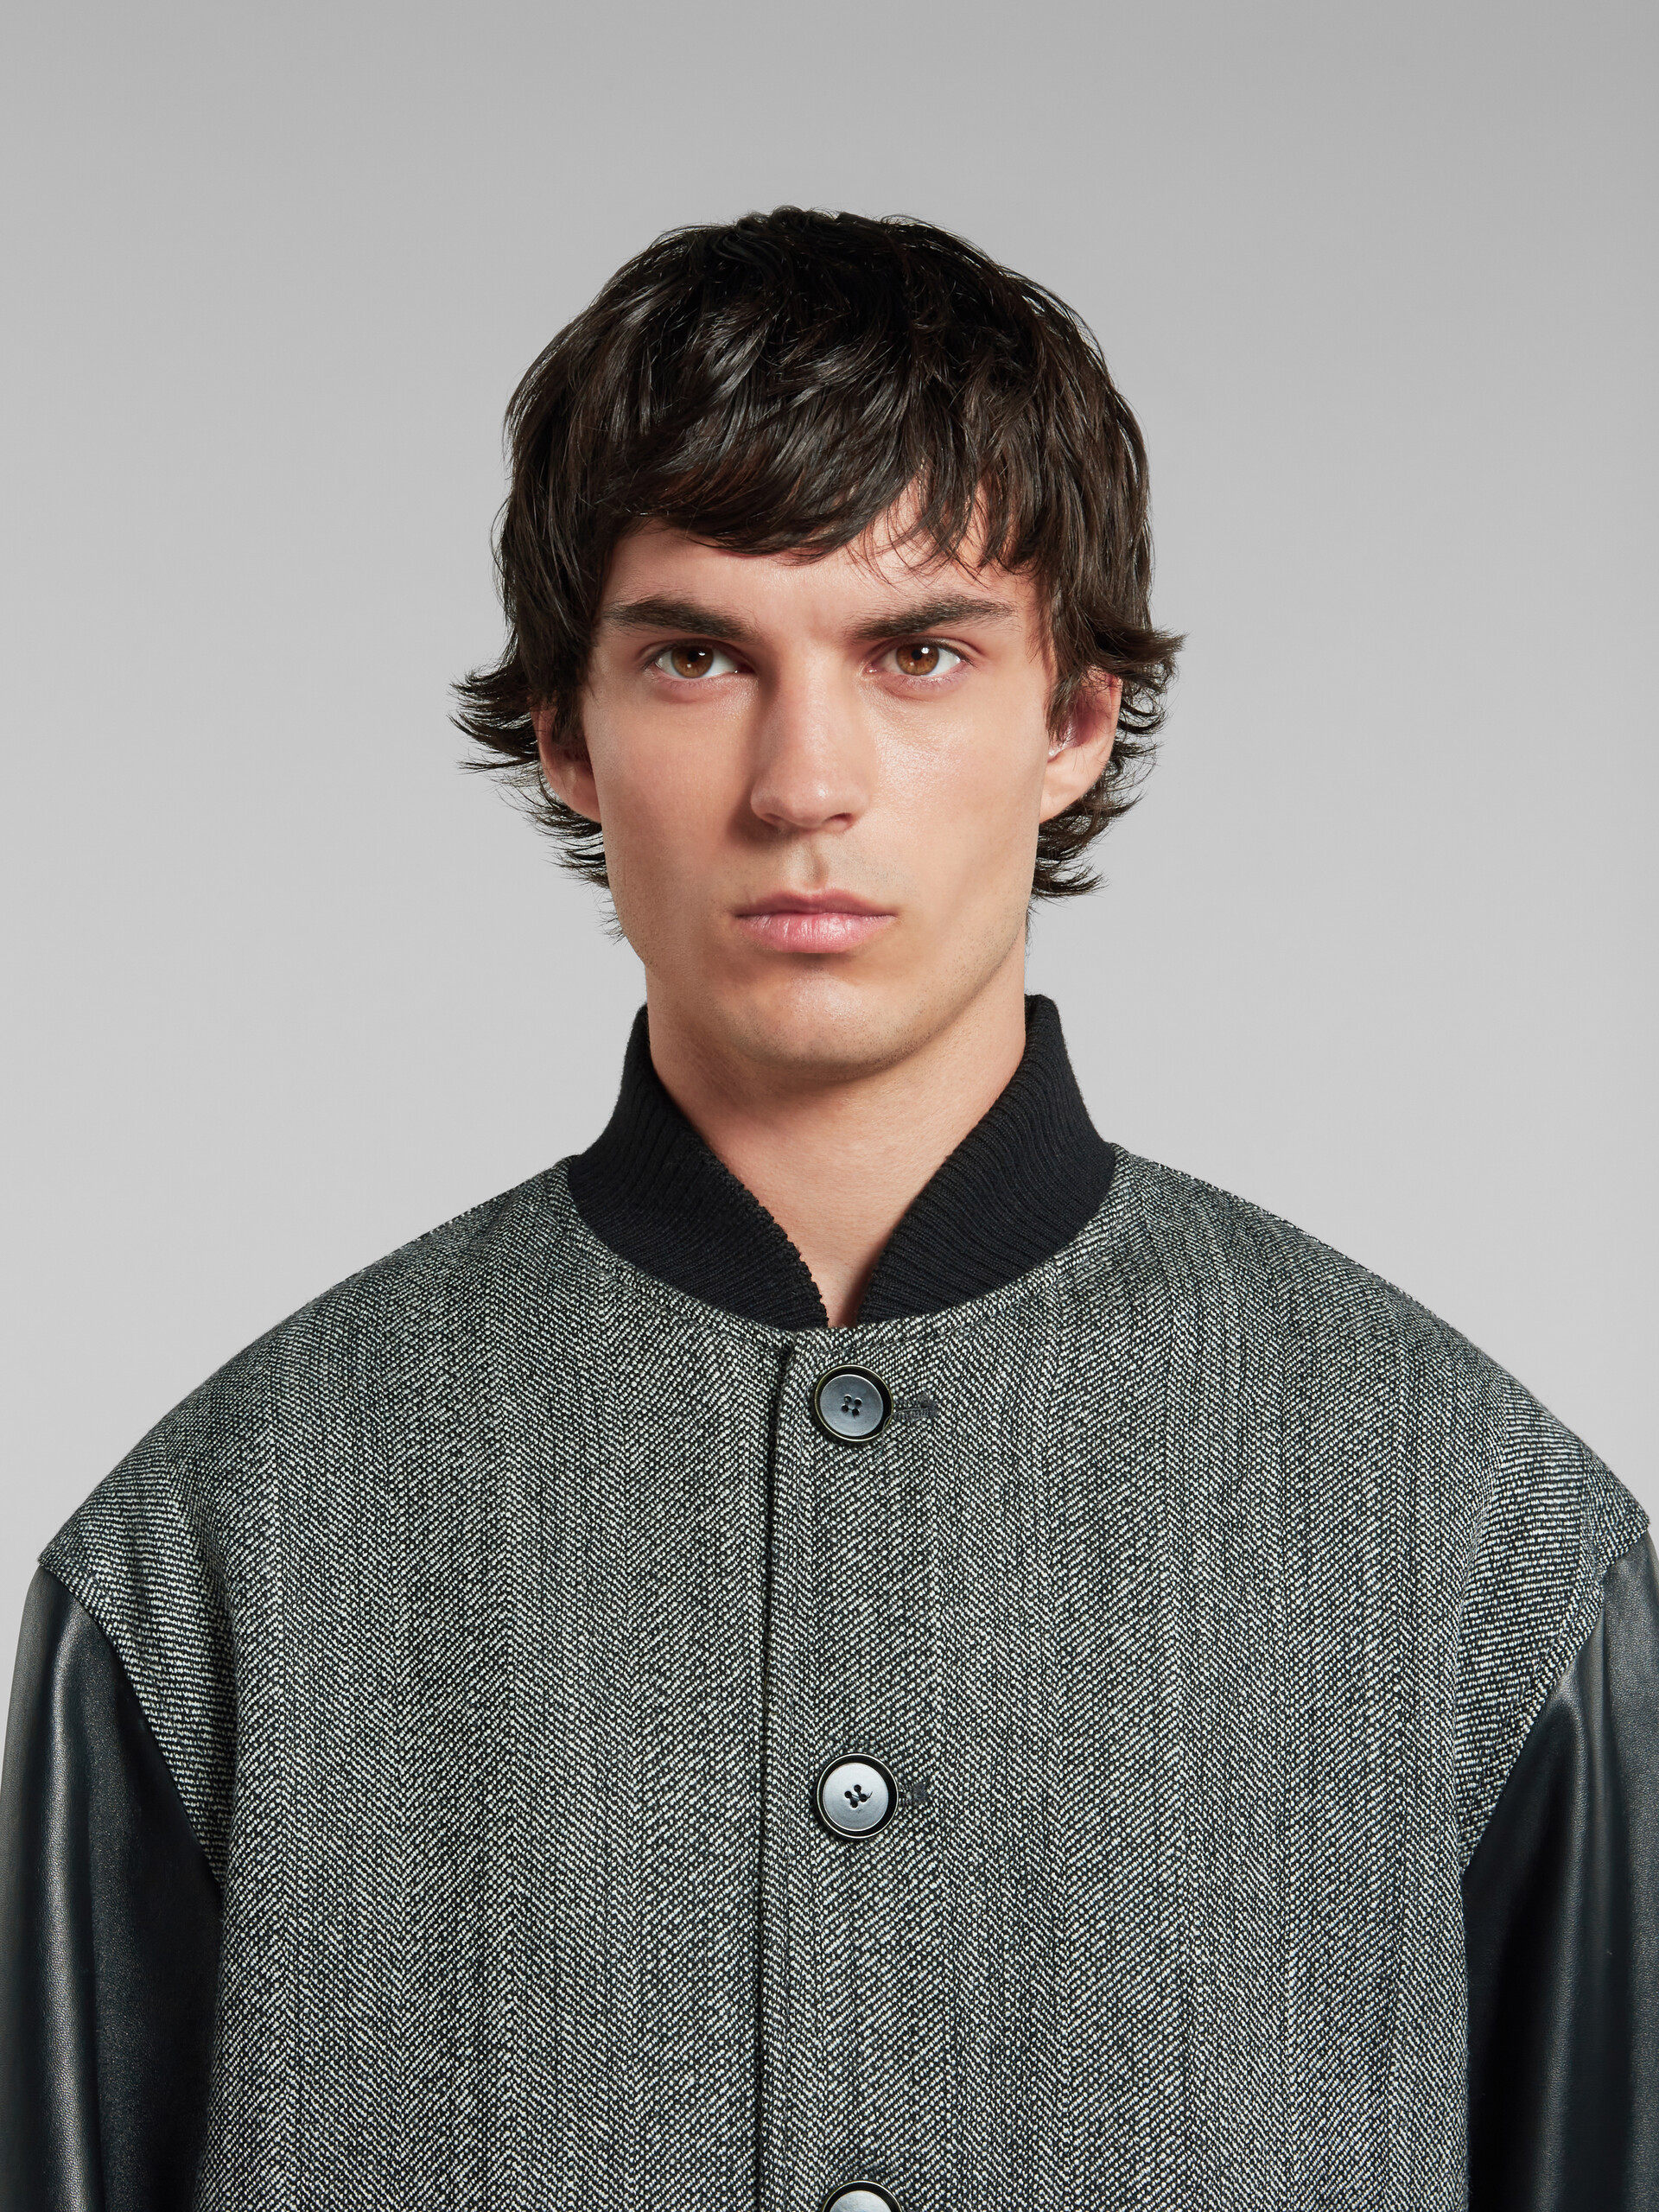 Black herringbone wool jacket with leather sleeves - Jackets - Image 4